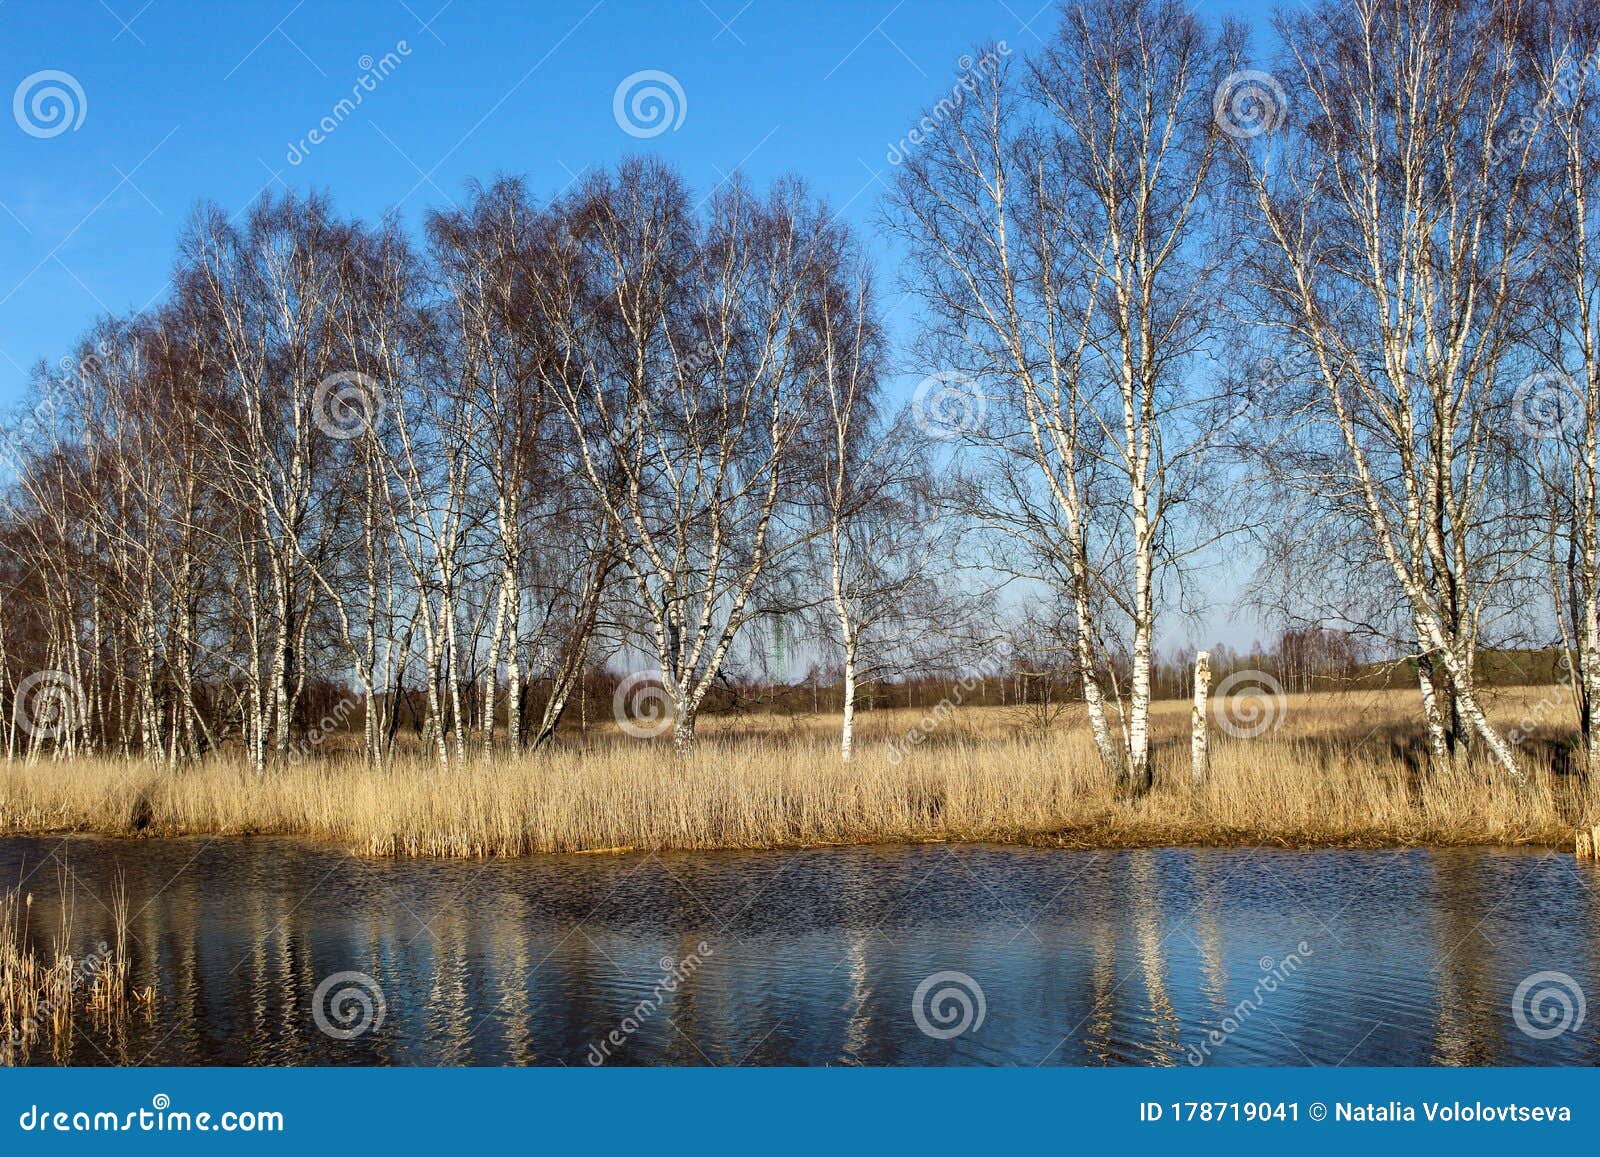 birch grove along the river